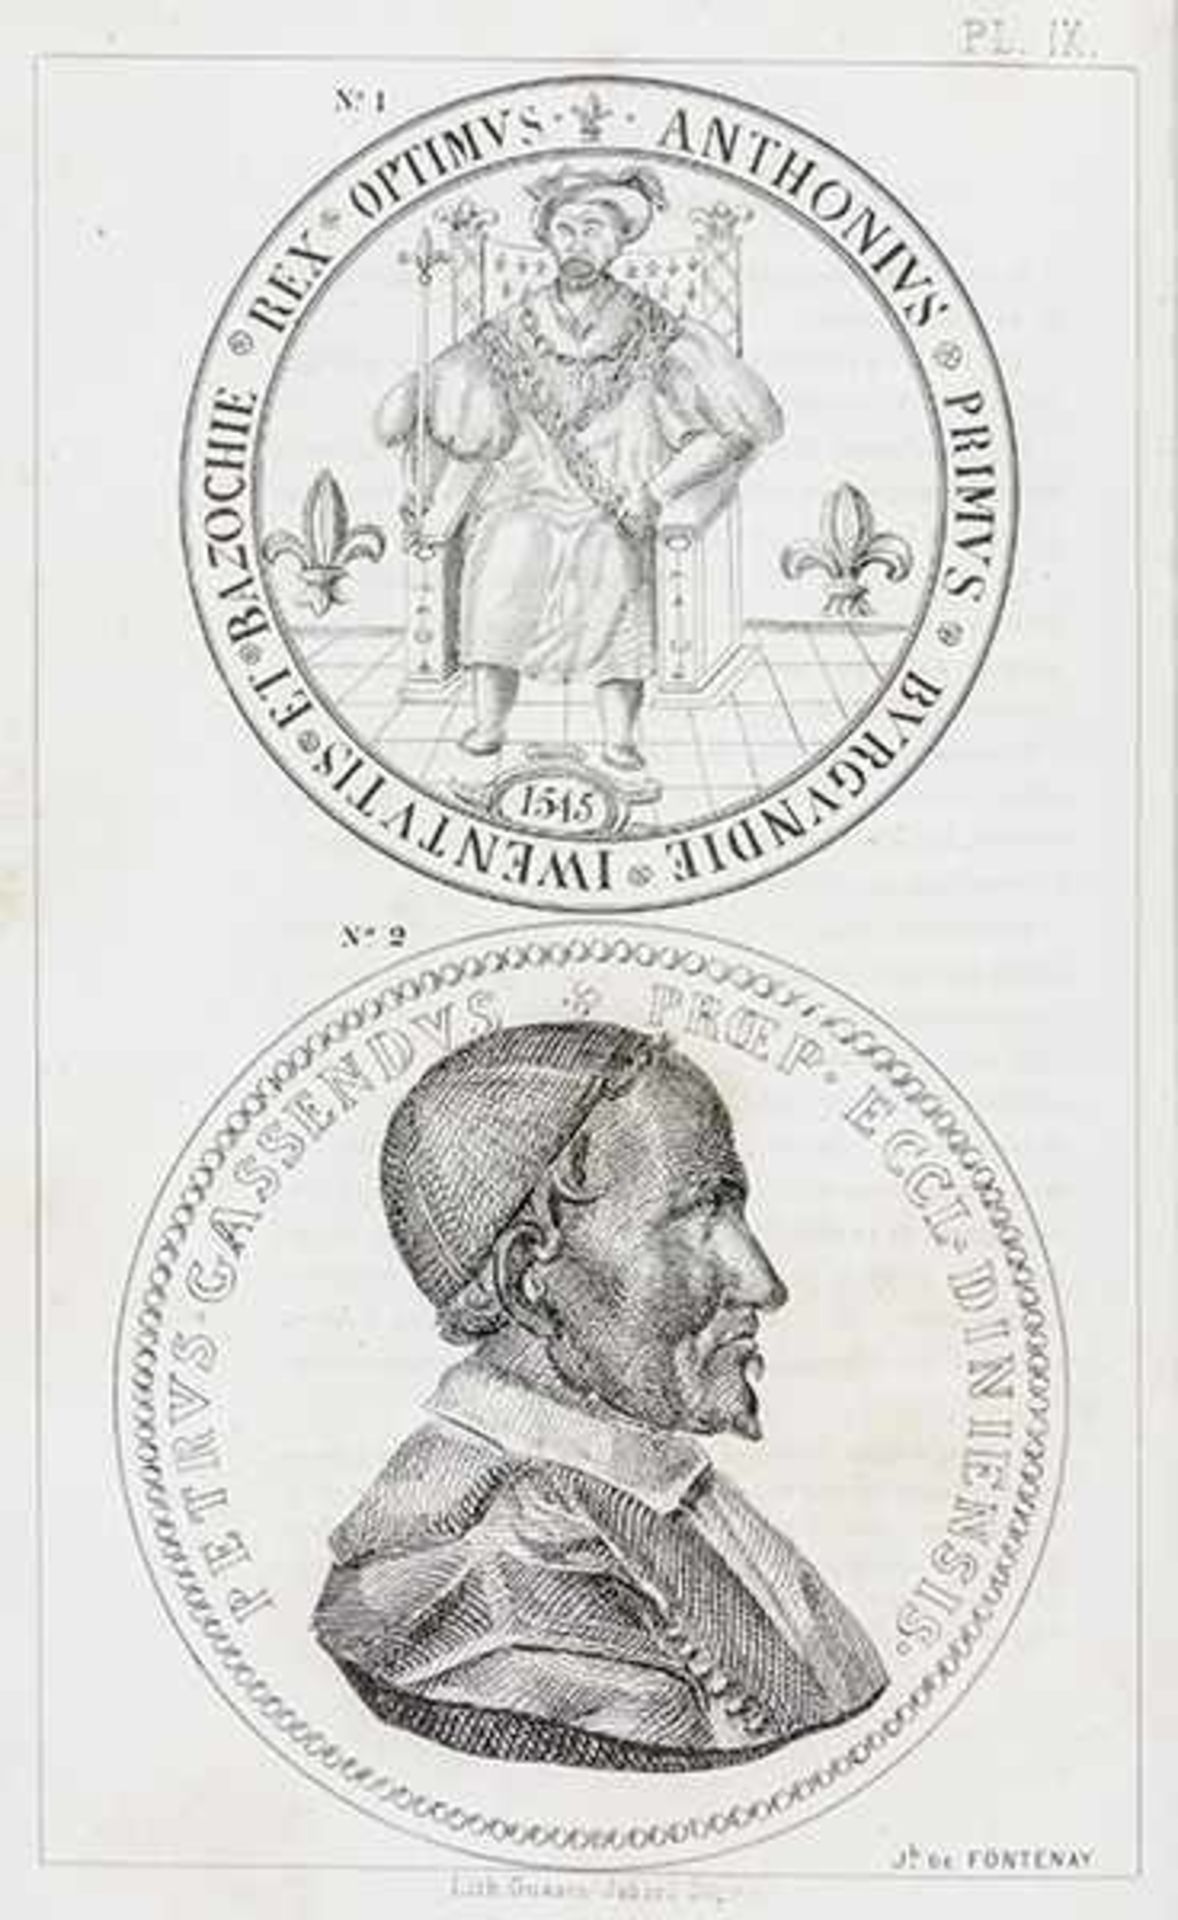 Numismatik - - Fontenay, J. de. Fragments d'histoire métallique. Mit 25 lithographischen Tafeln